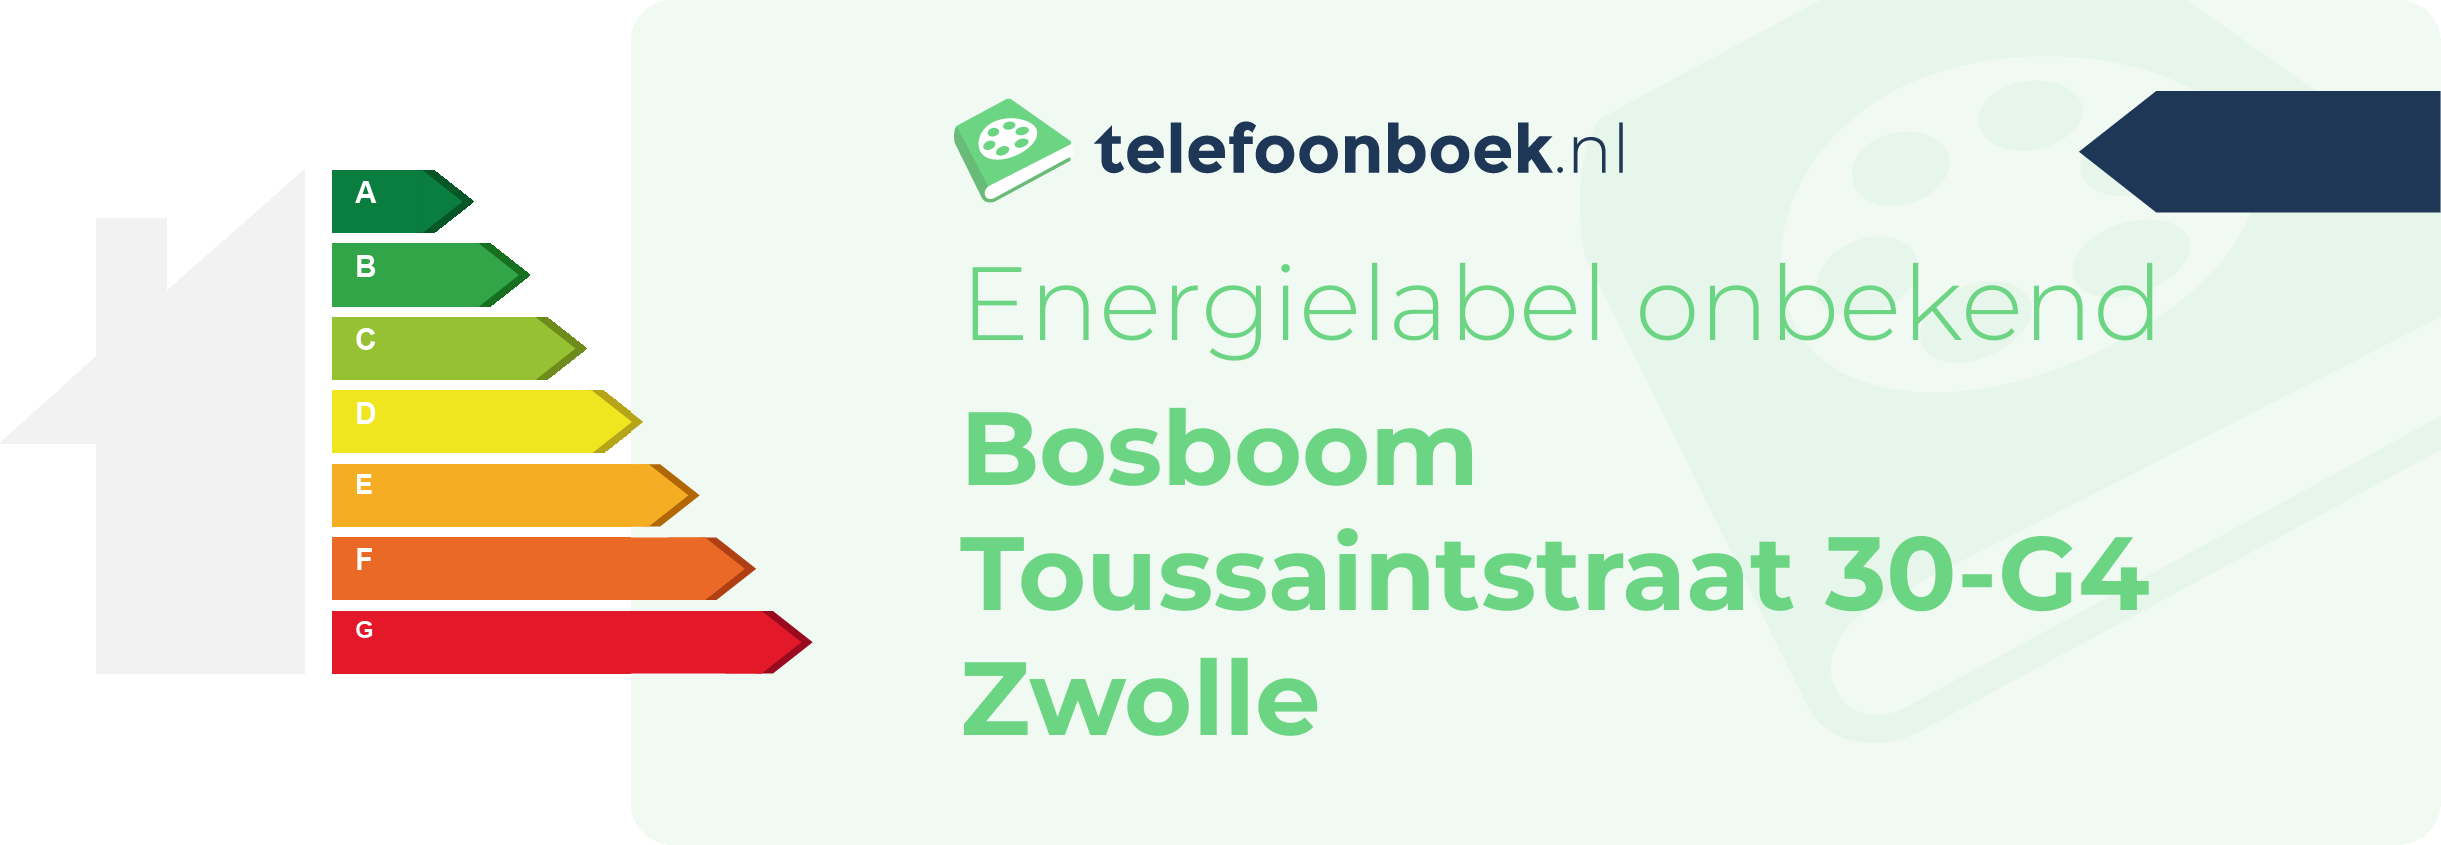 Energielabel Bosboom Toussaintstraat 30-G4 Zwolle